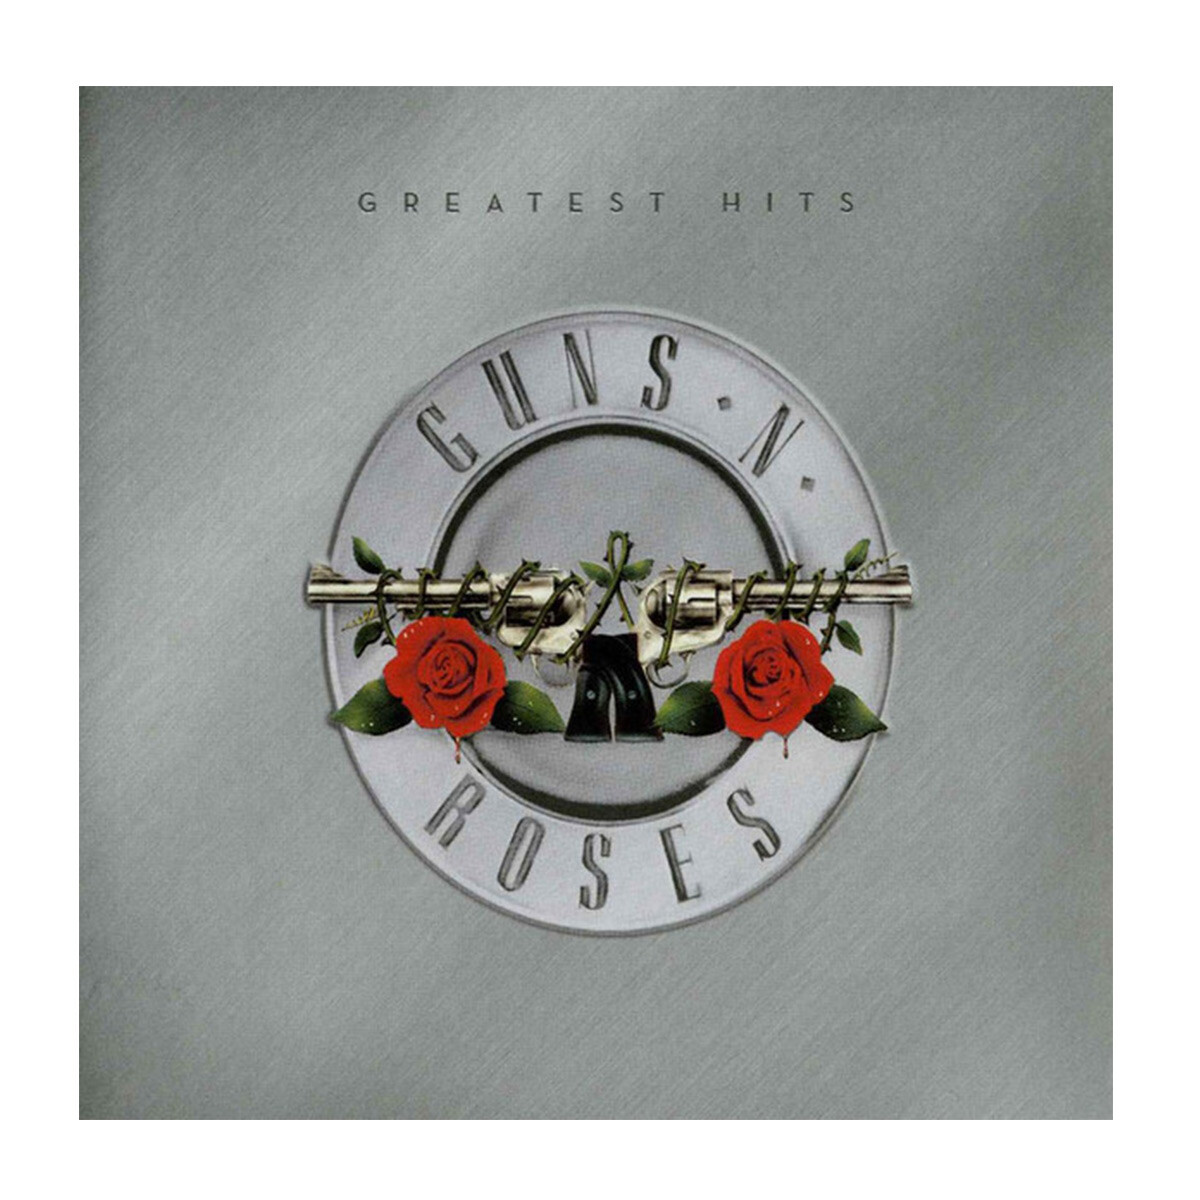 Guns N Roses - Greatest Hits - Cd 